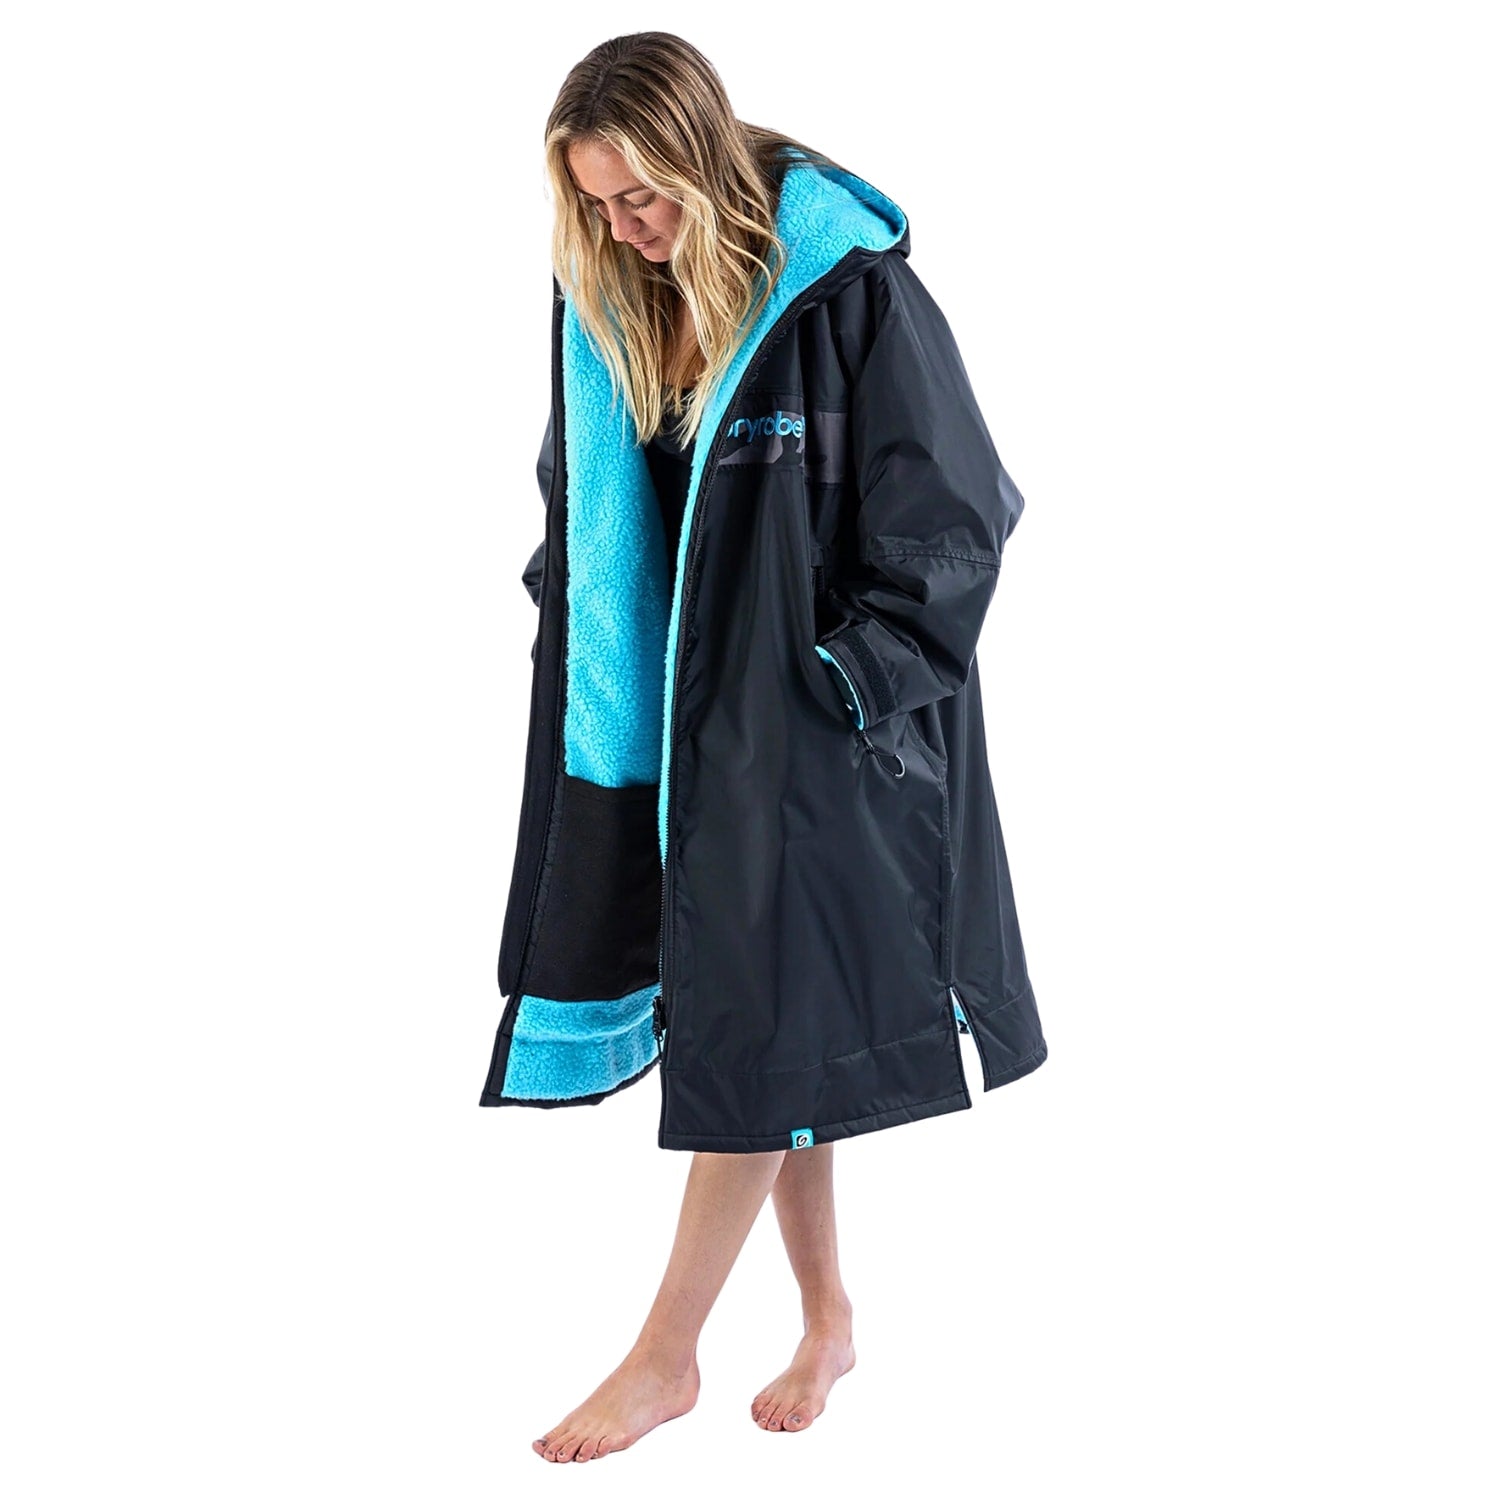 Dryrobe Advance Long Sleeve Remix Drying & Changing Robe - Black/Blue - Changing Robe Poncho Towel by Dryrobe